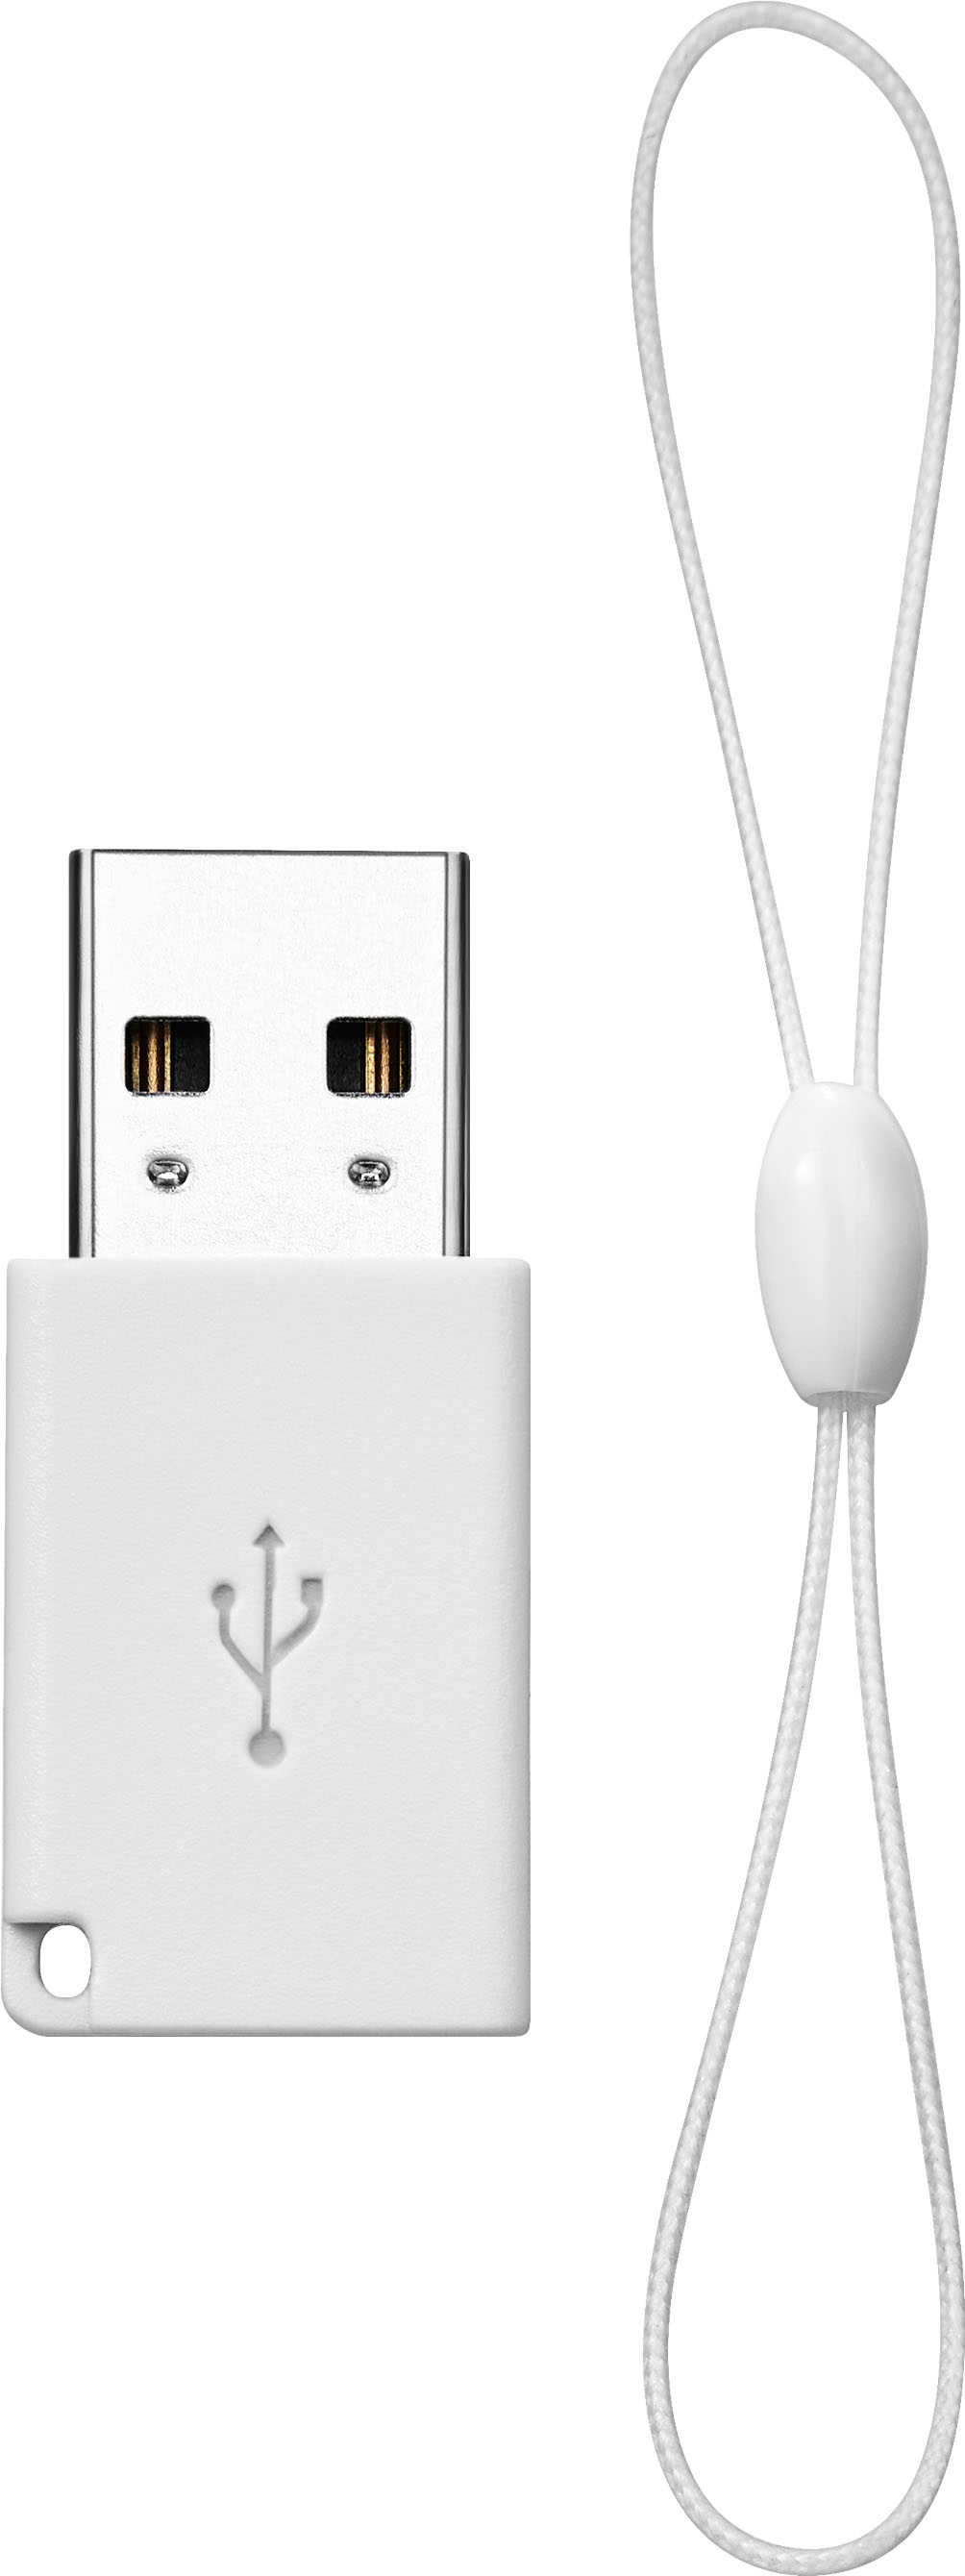 Dolphix - Adaptateur adaptateur USB femelle vers USB femelle - USB